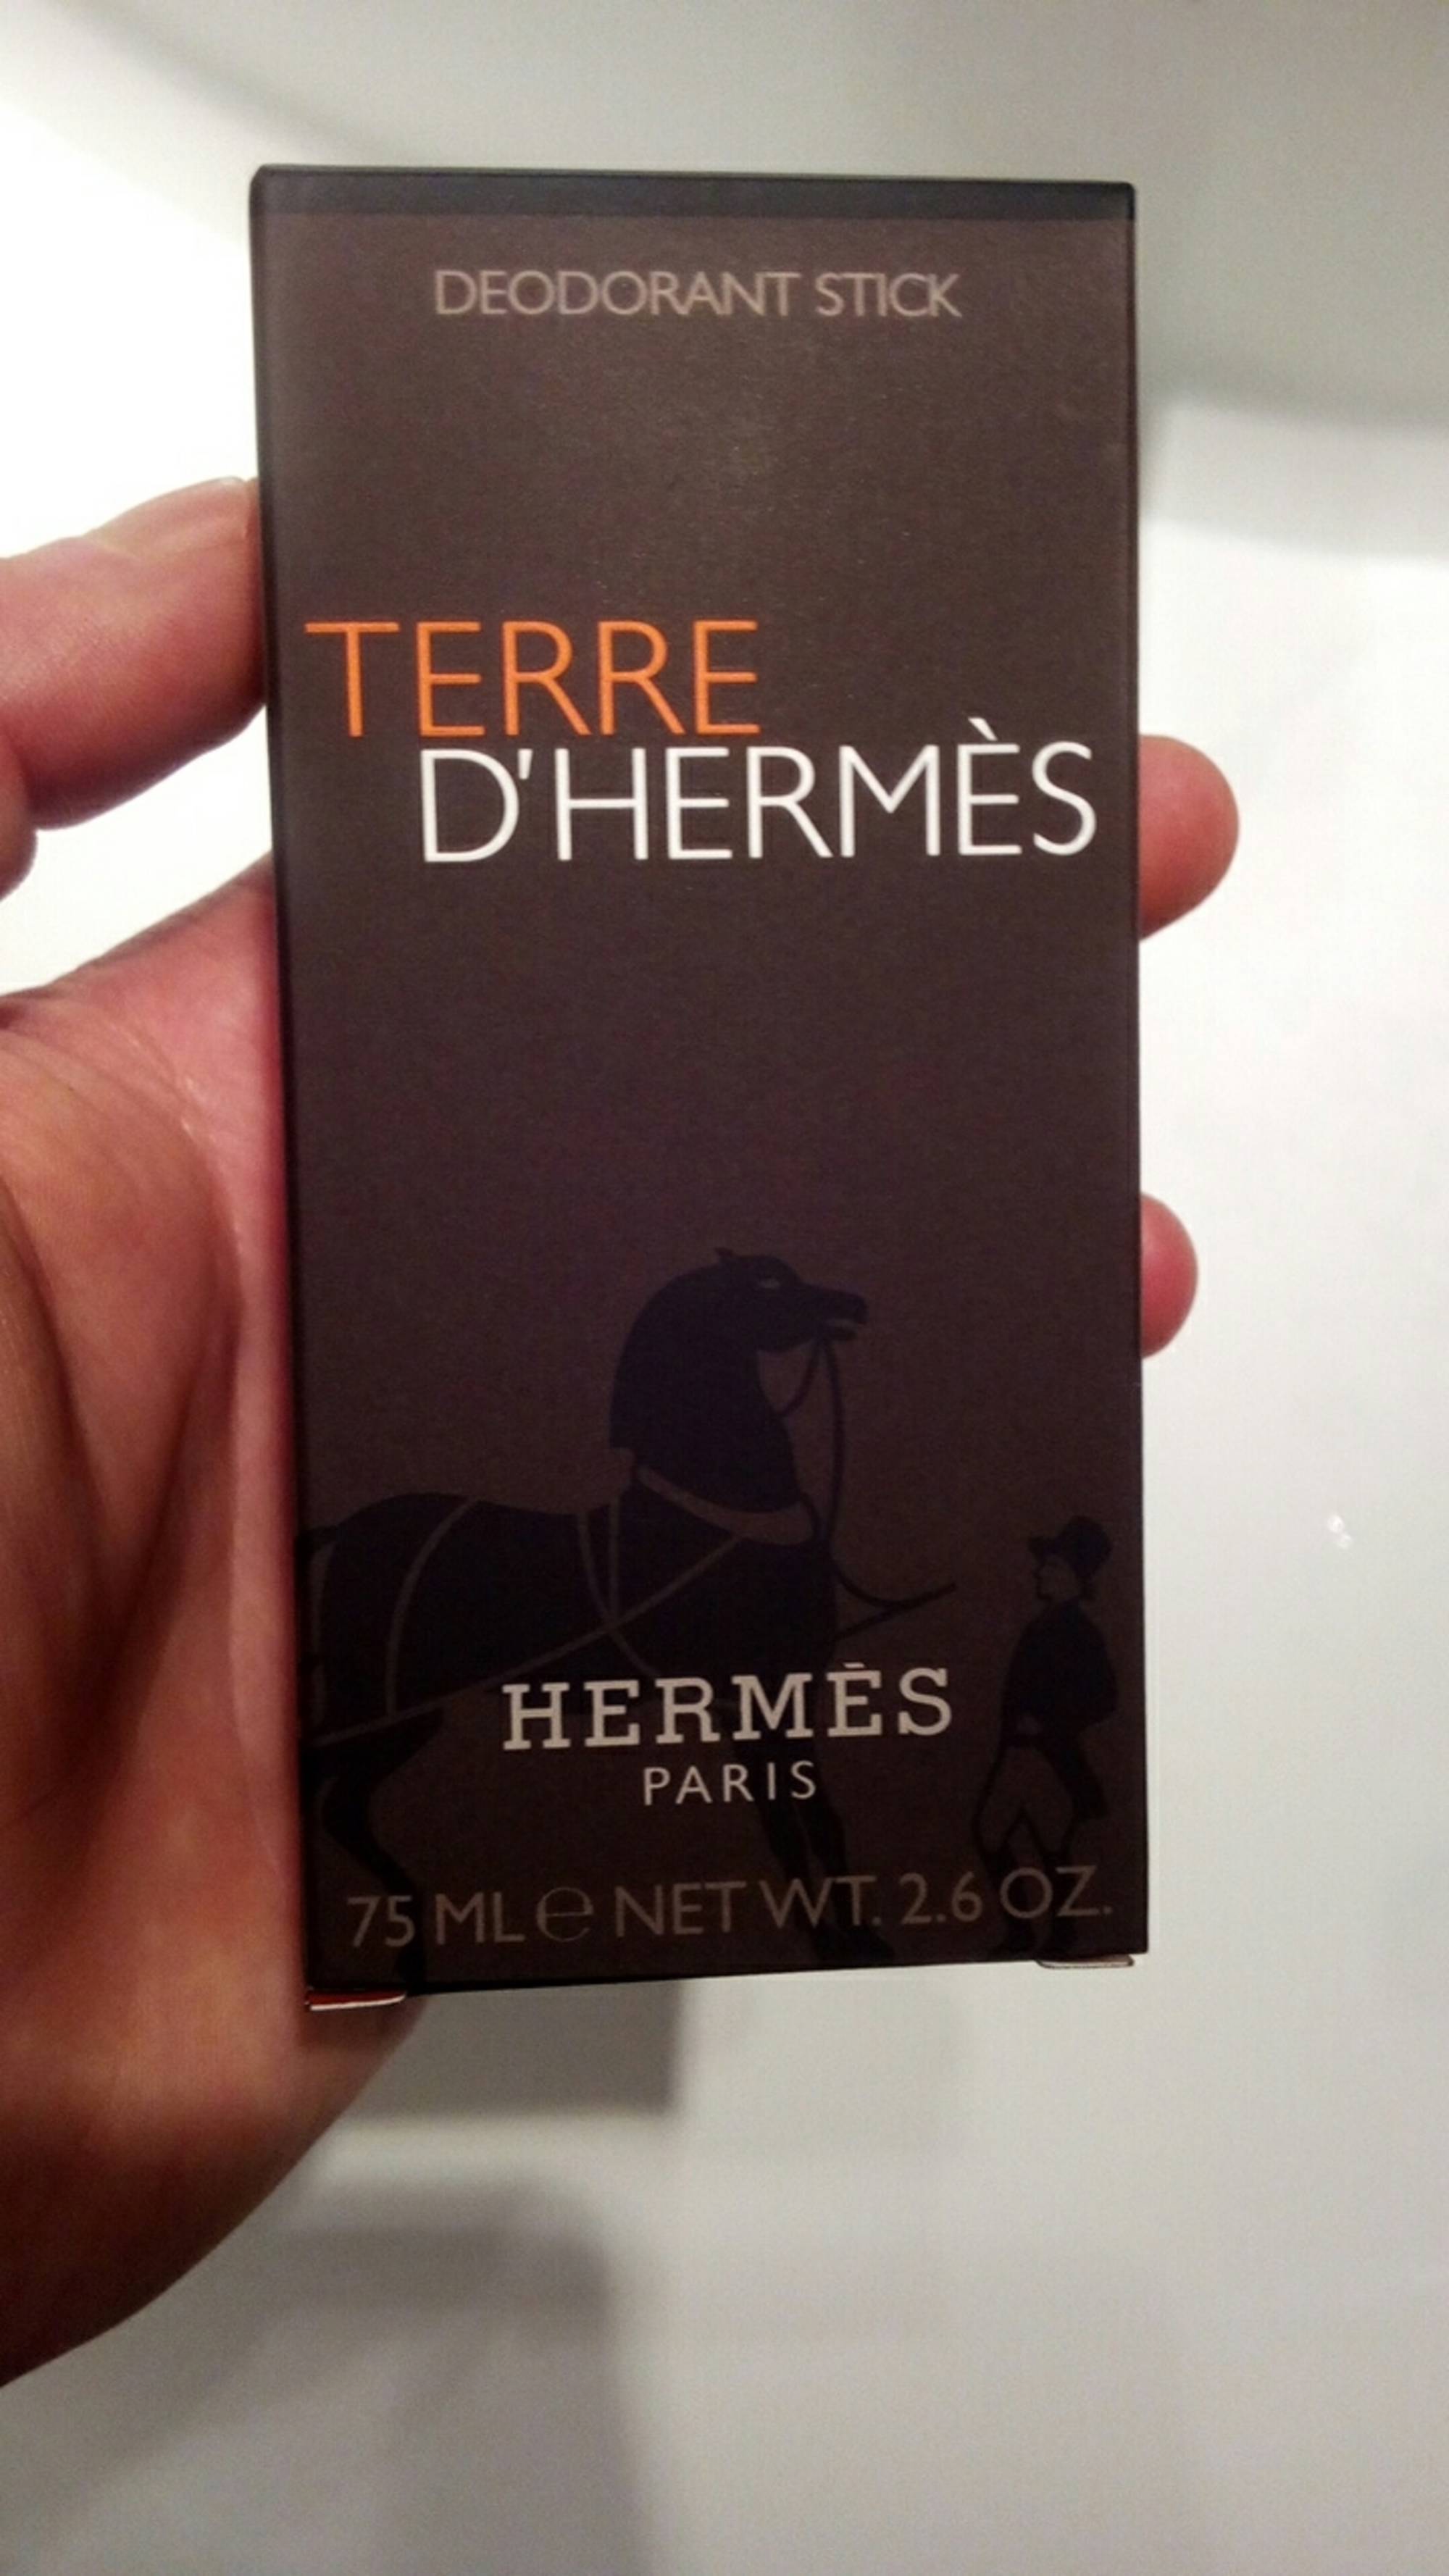 Hermes deodorant stick